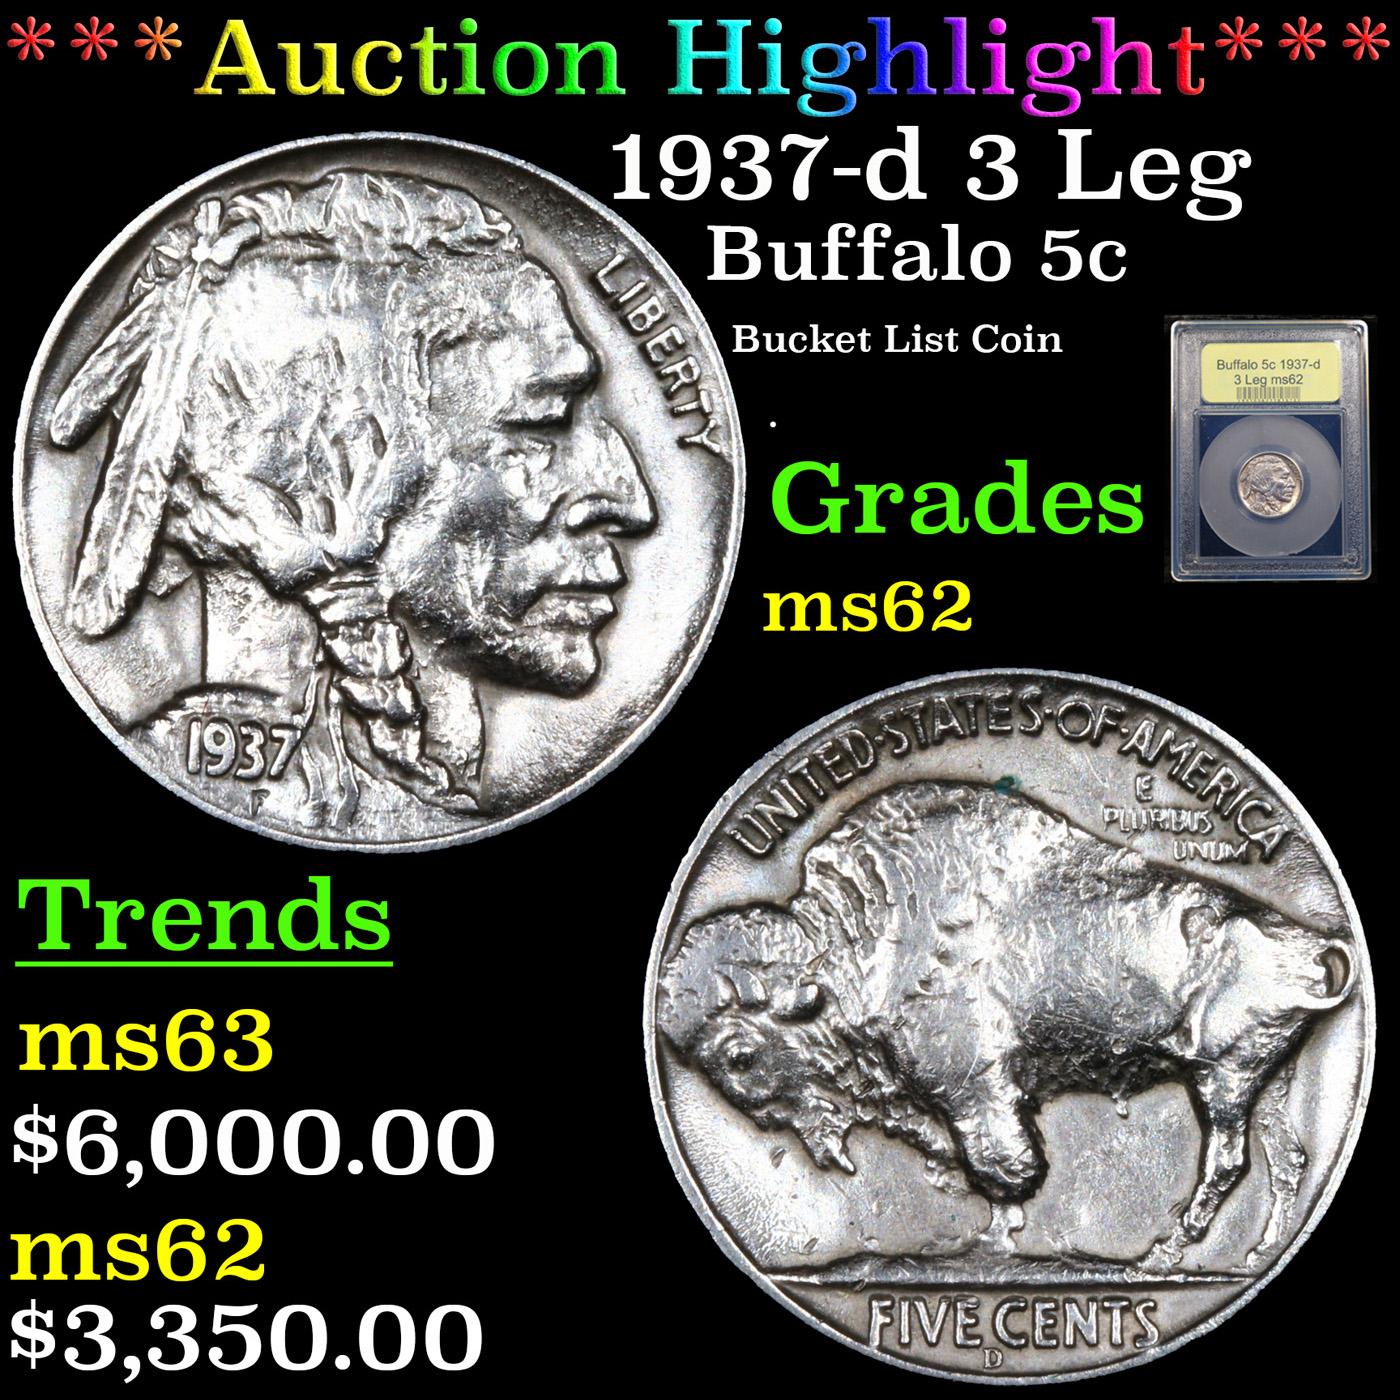 ***Auction Highlight*** 1937-d 3 Leg Buffalo Nickel 5c Graded Select Unc BY USCG (fc)